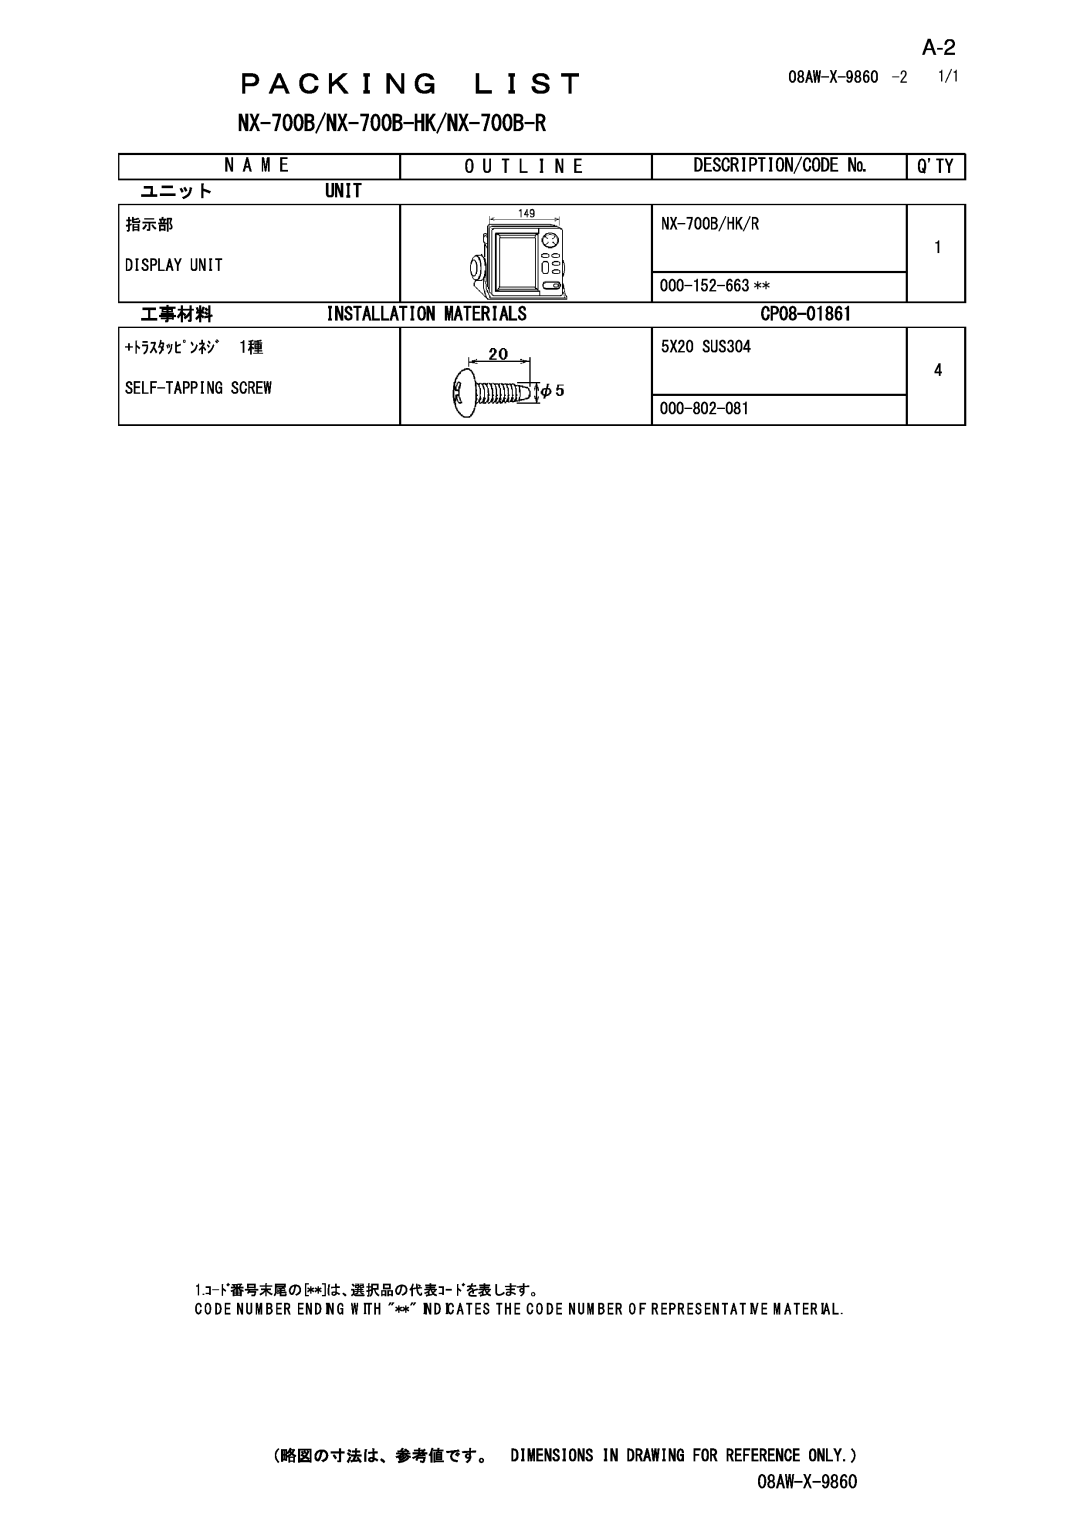 Furuno manual NX-700B/NX-700B-HK/NX-700B-R, Ｐａｃｋｉｎｇ, Ｌｉｓｔ, N A M E, O U T L I N E, Description/Code, ユニット, Unit, 工事材料 